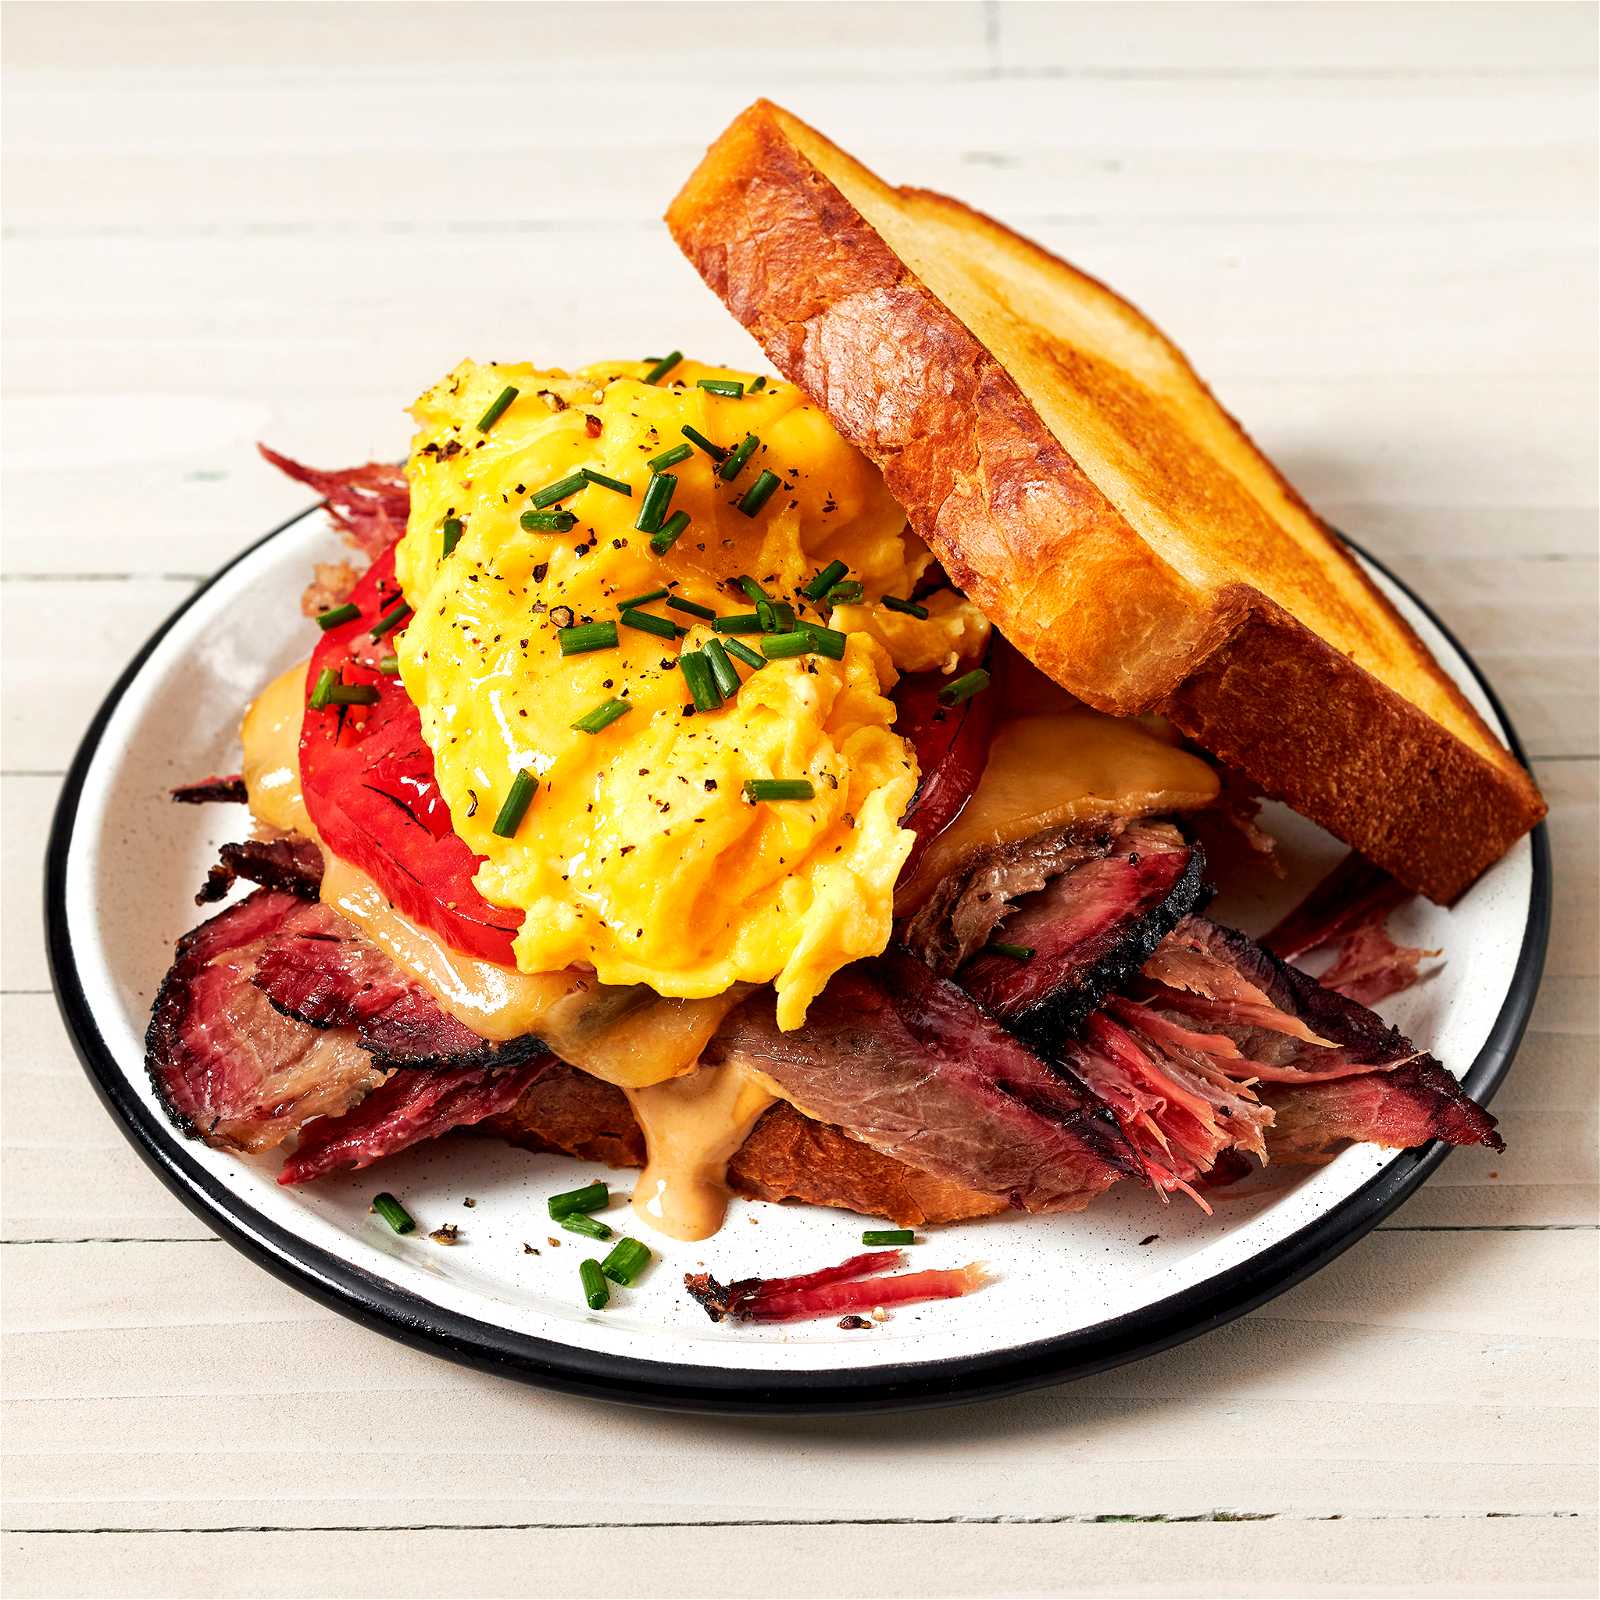 Image of Smoked Brisket Breakfast Sandwich on Texas Toast